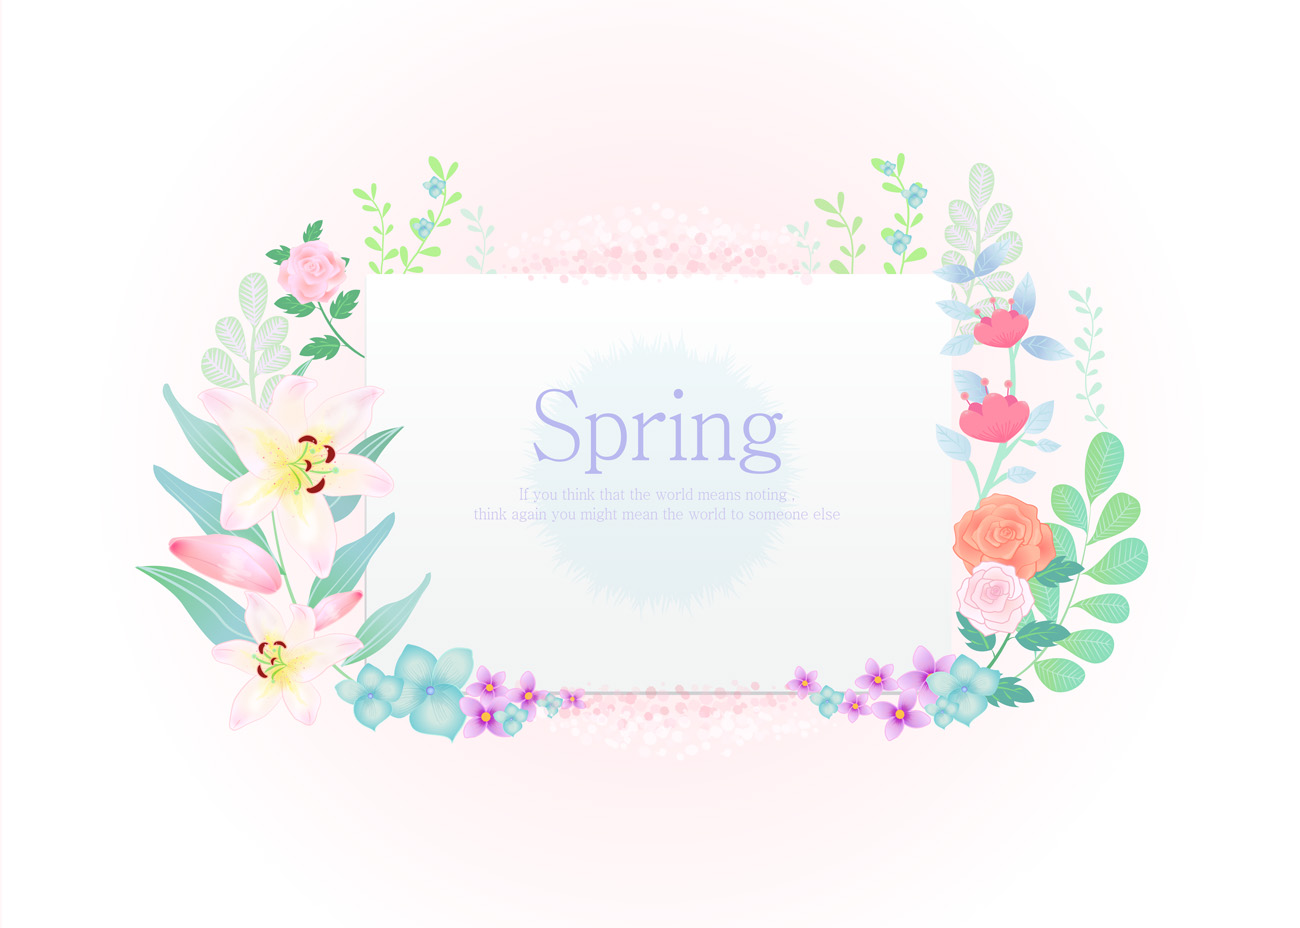 Spring 韩国春天的花朵清新的AI矢量高清背景素材 ti